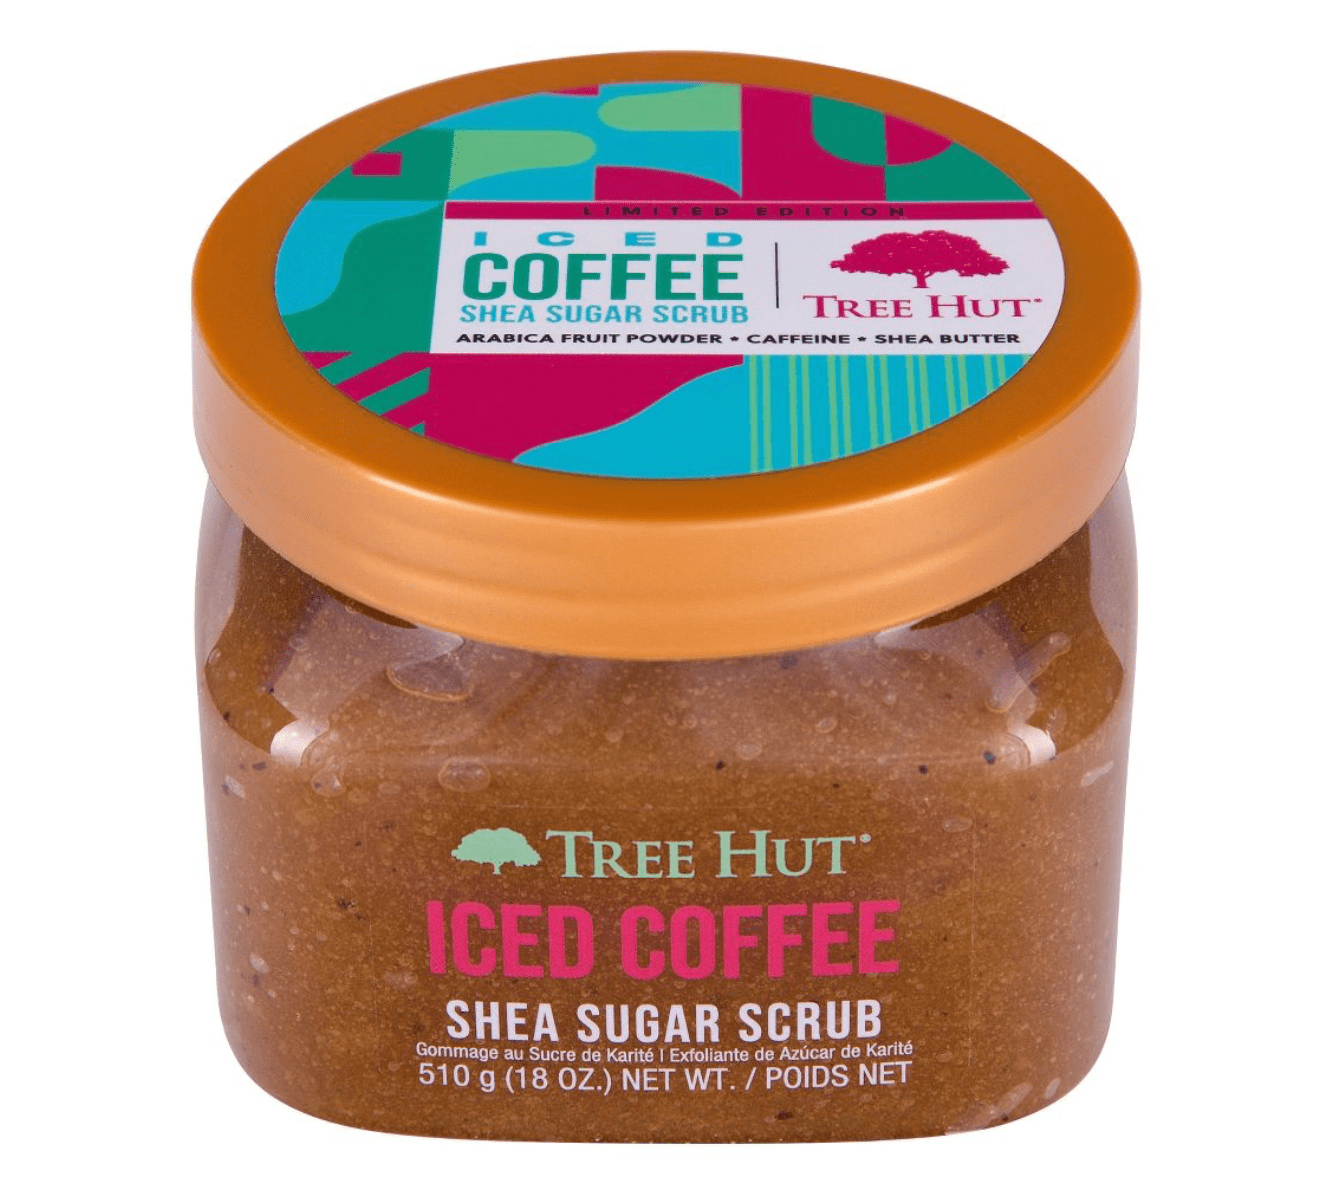 Tree hut - "Iced coffee" body scrub - 510g - Tree Hut - Ethni Beauty Market